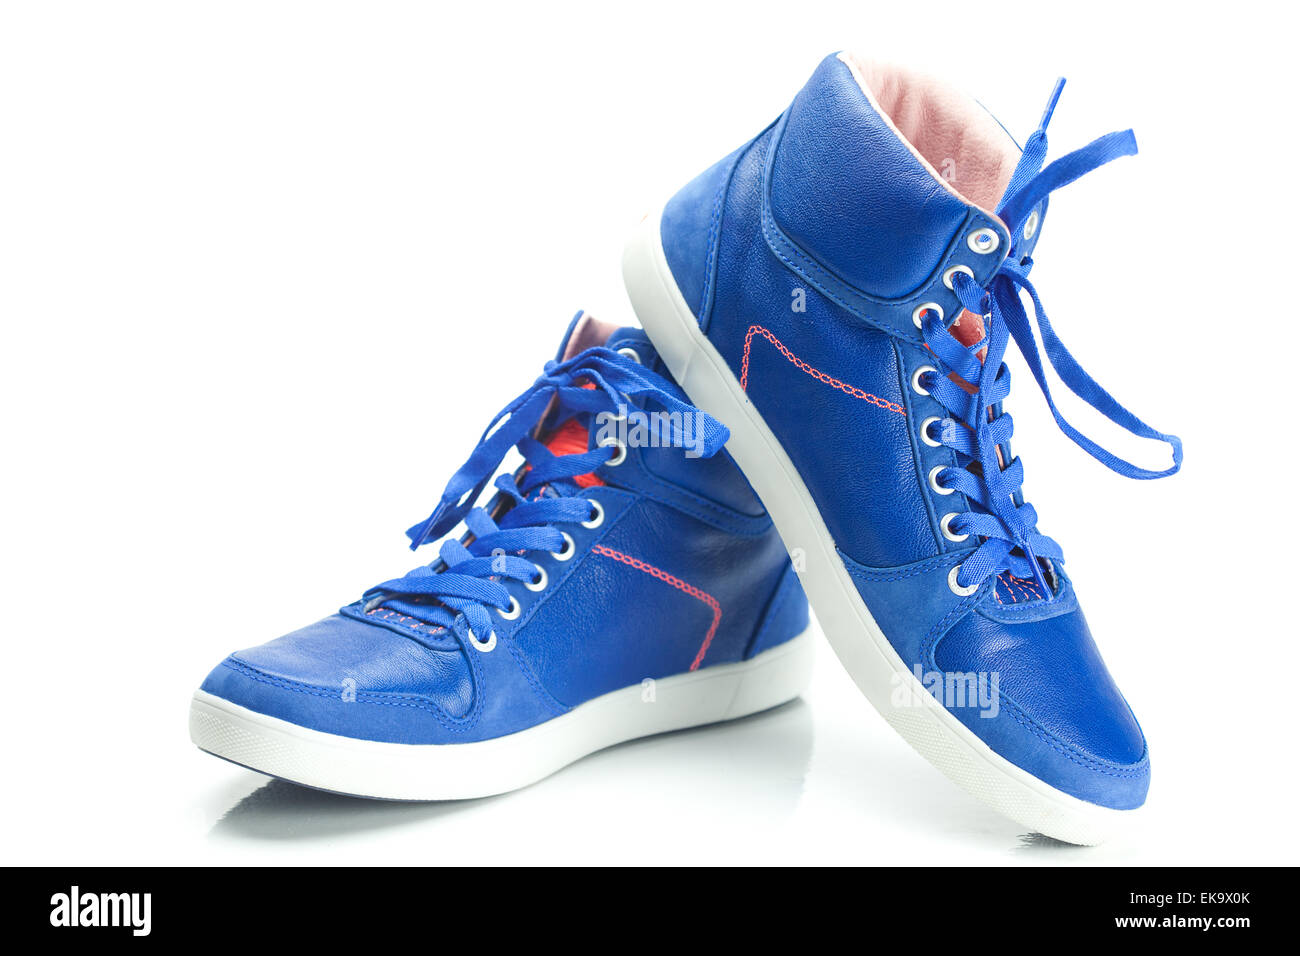 Belles chaussures de sport bleu isolated on white Banque D'Images